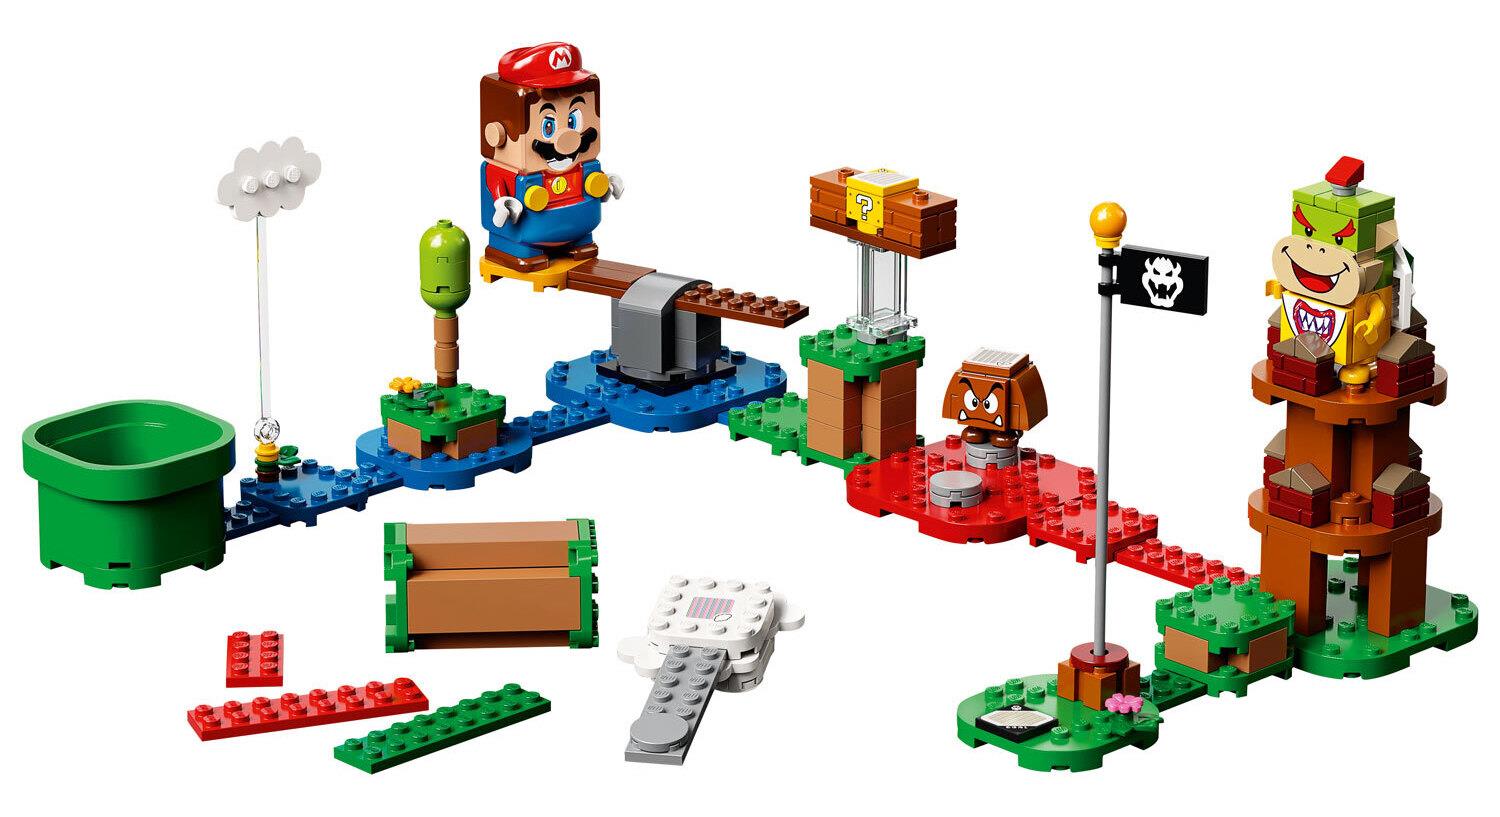 Hand-crank a level of Super Mario Bros. on Lego's new 2,646-piece